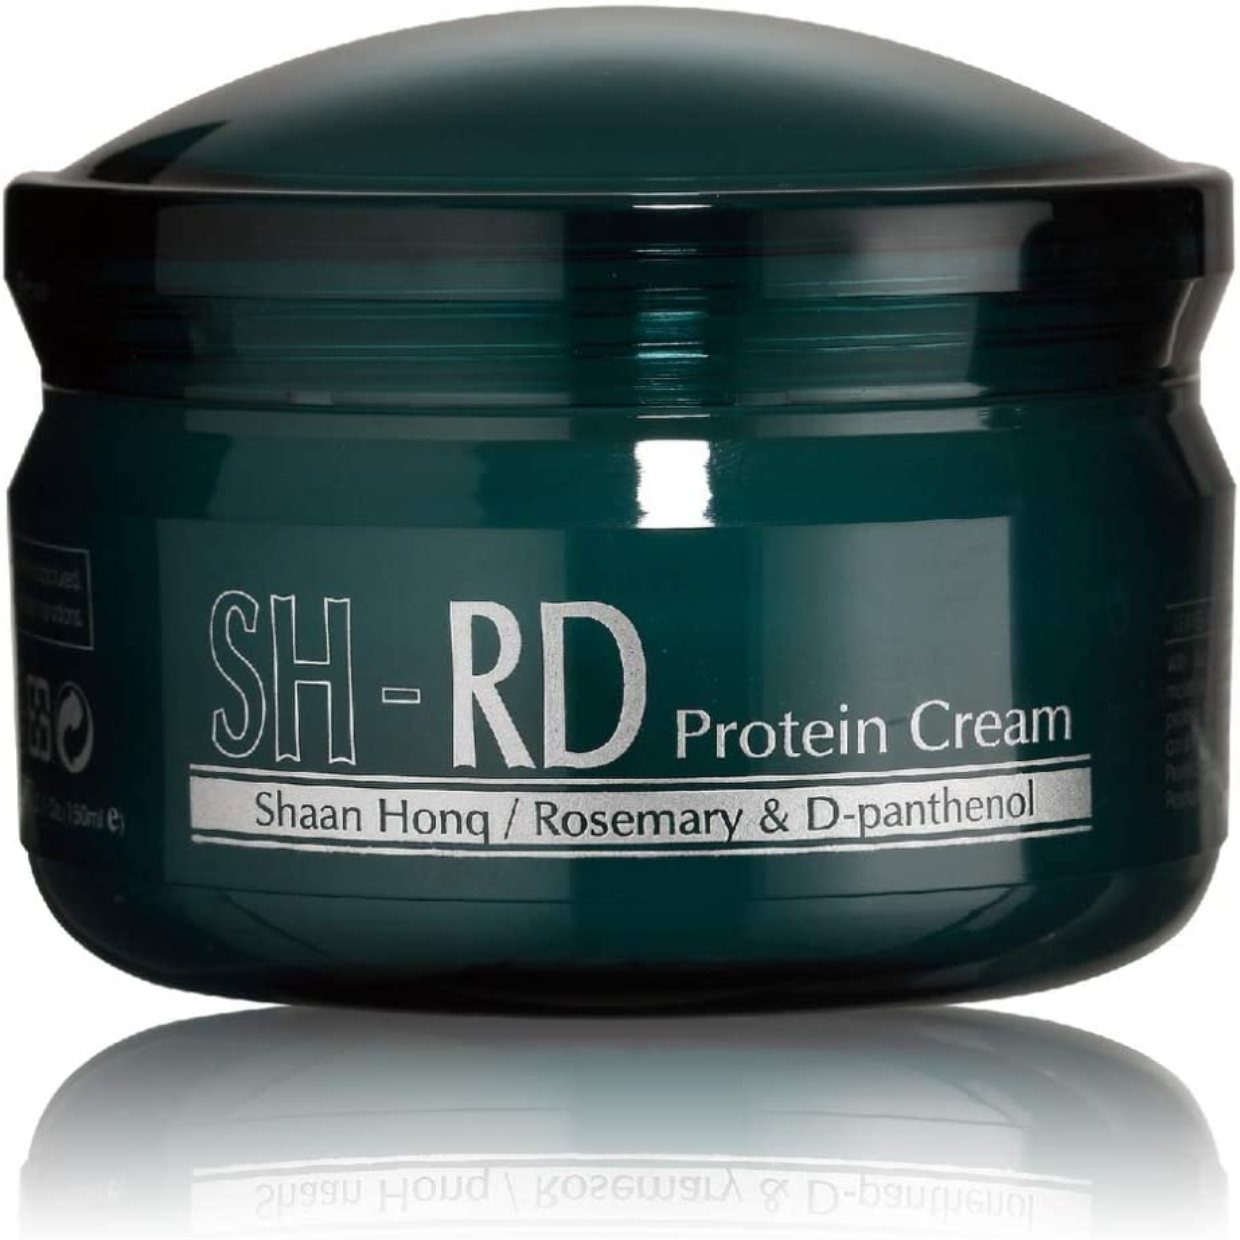 N.p.p.e.sh-rd Protein Cream Leave-in